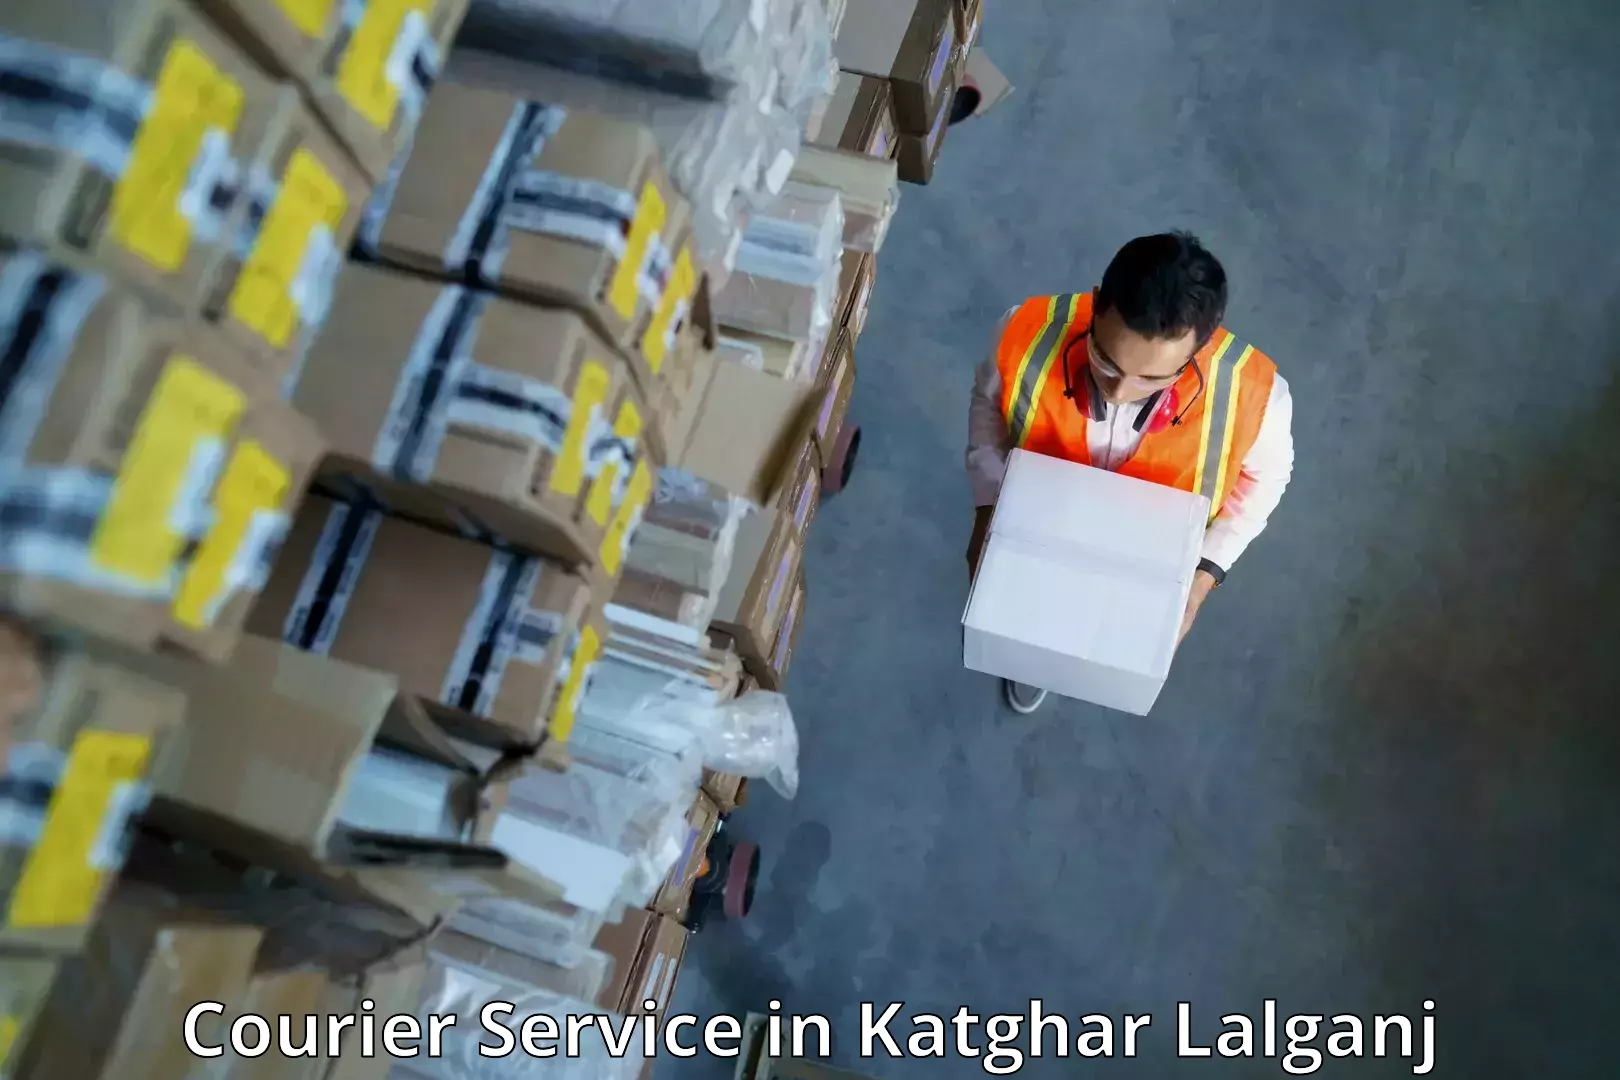 Multi-national courier services in Katghar Lalganj